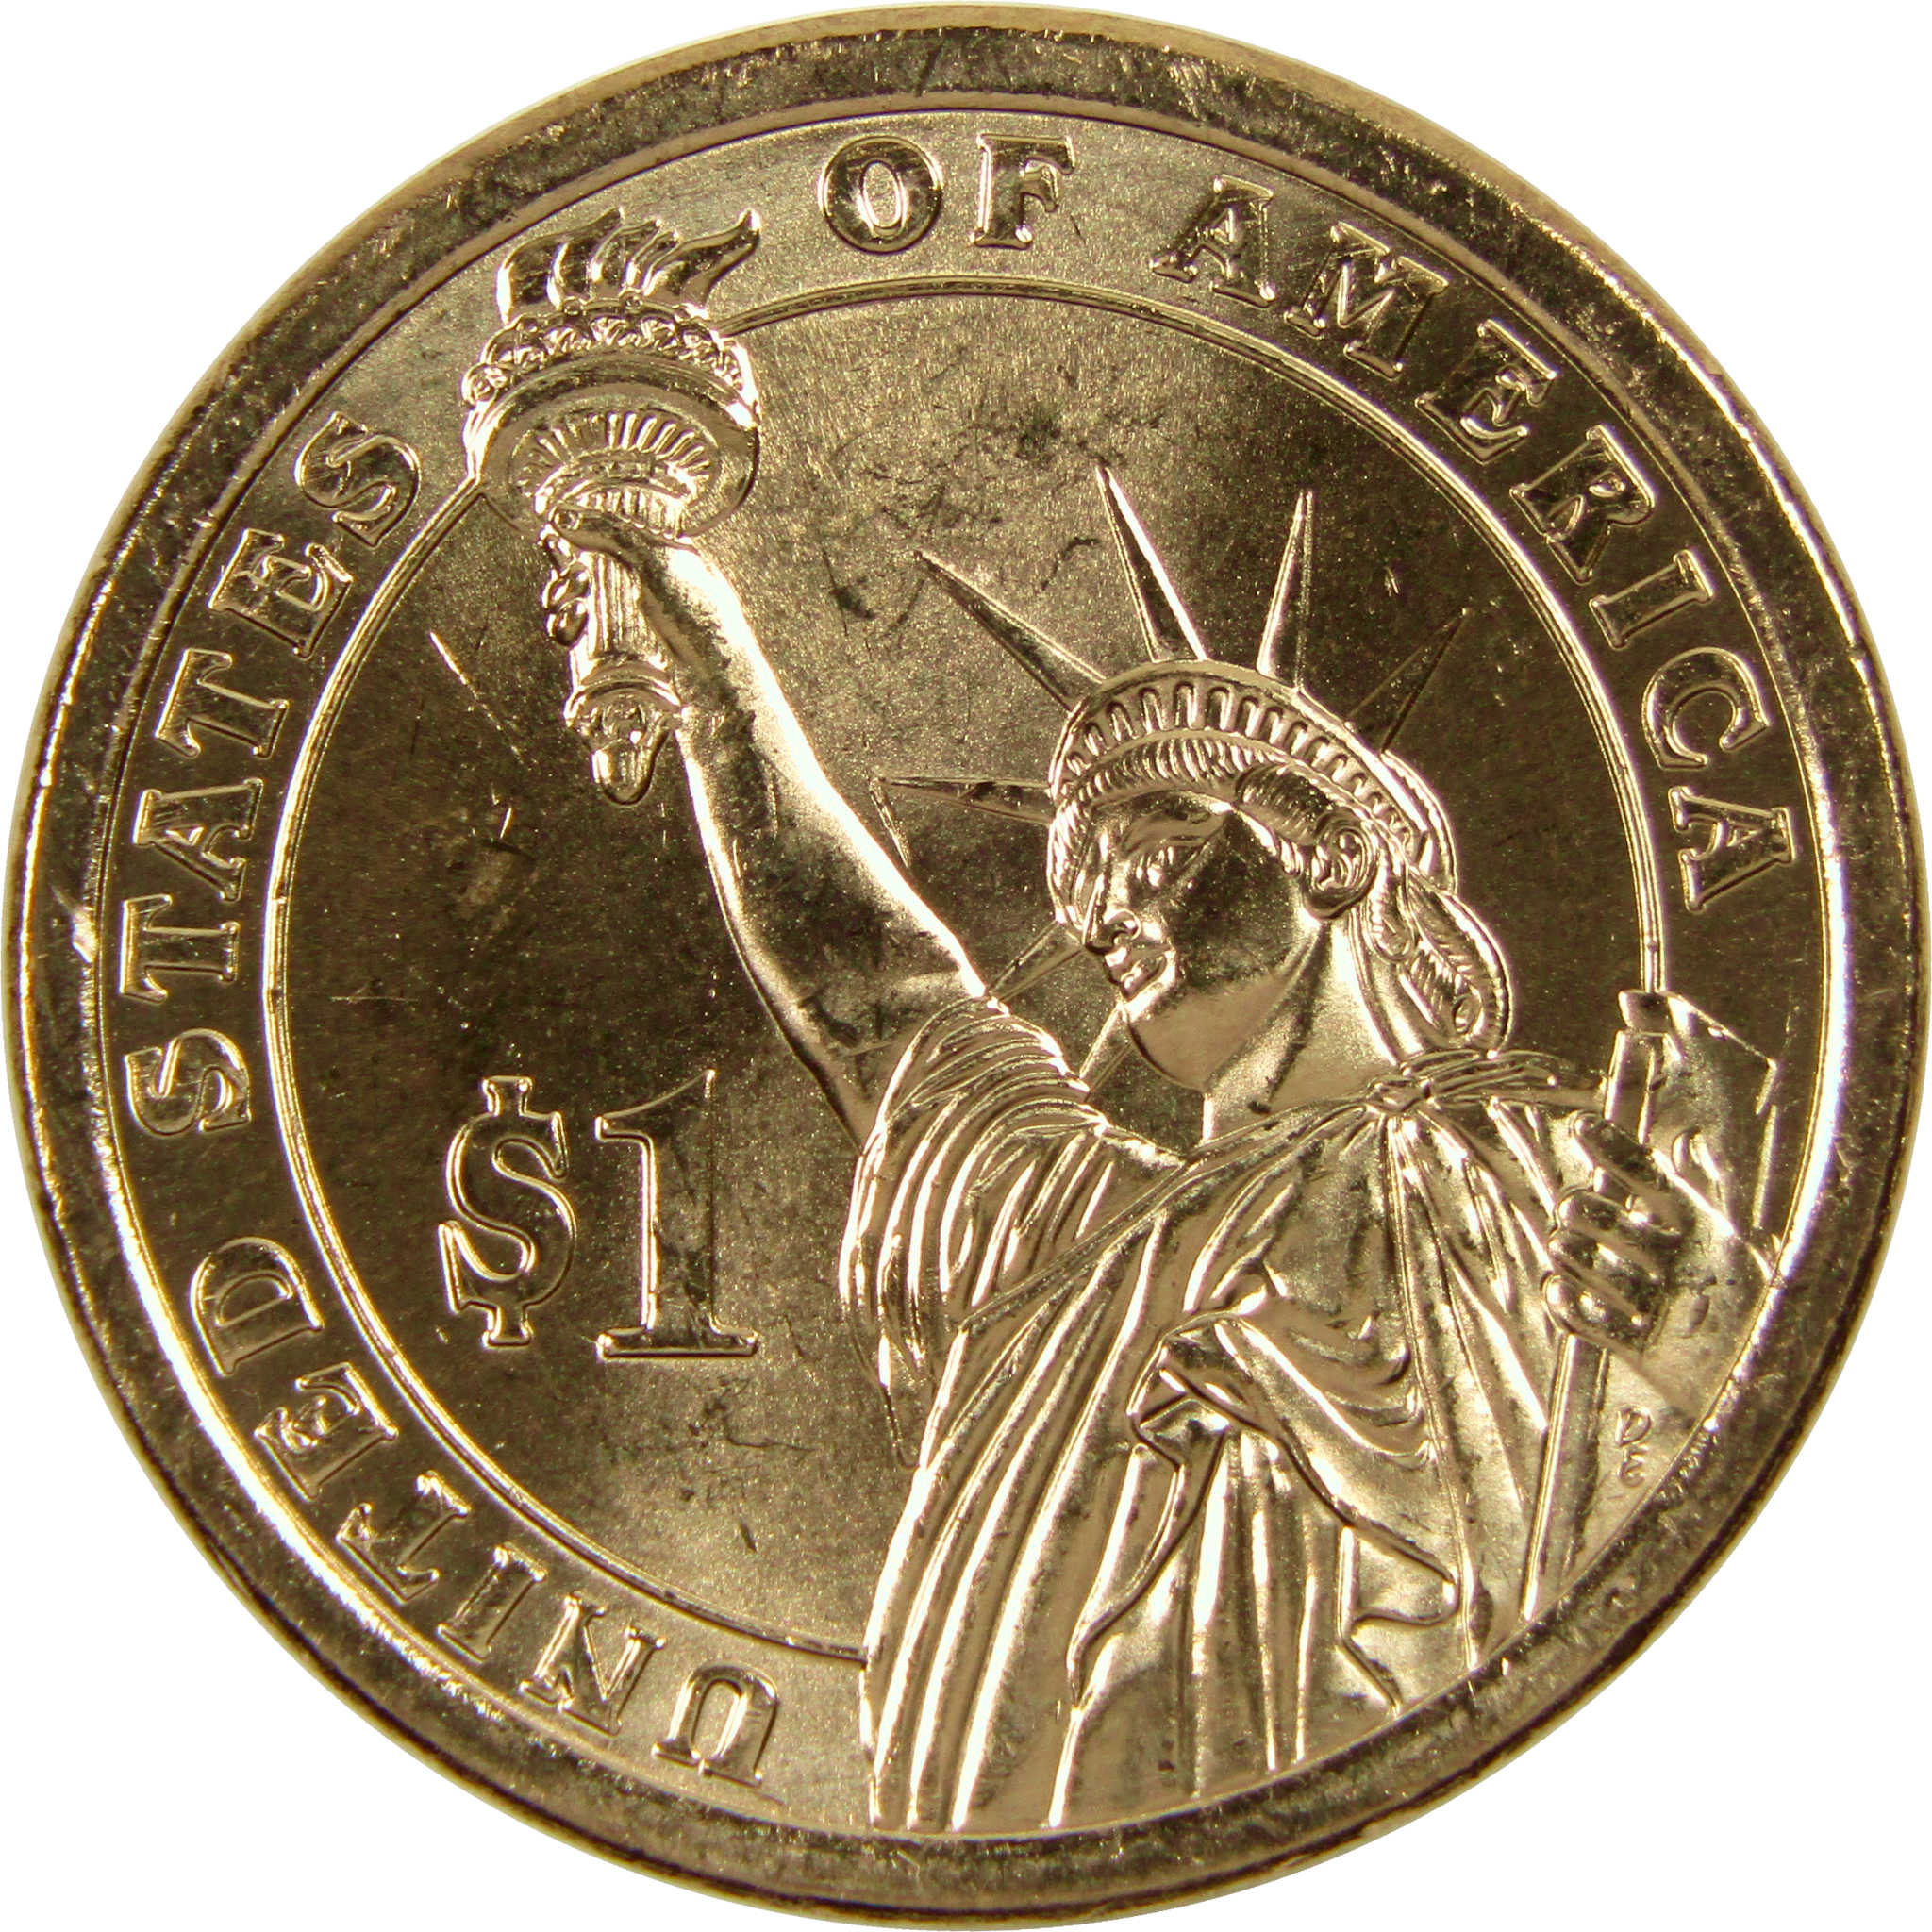 2009 D Zachary Taylor Presidential Dollar BU Uncirculated $1 Coin